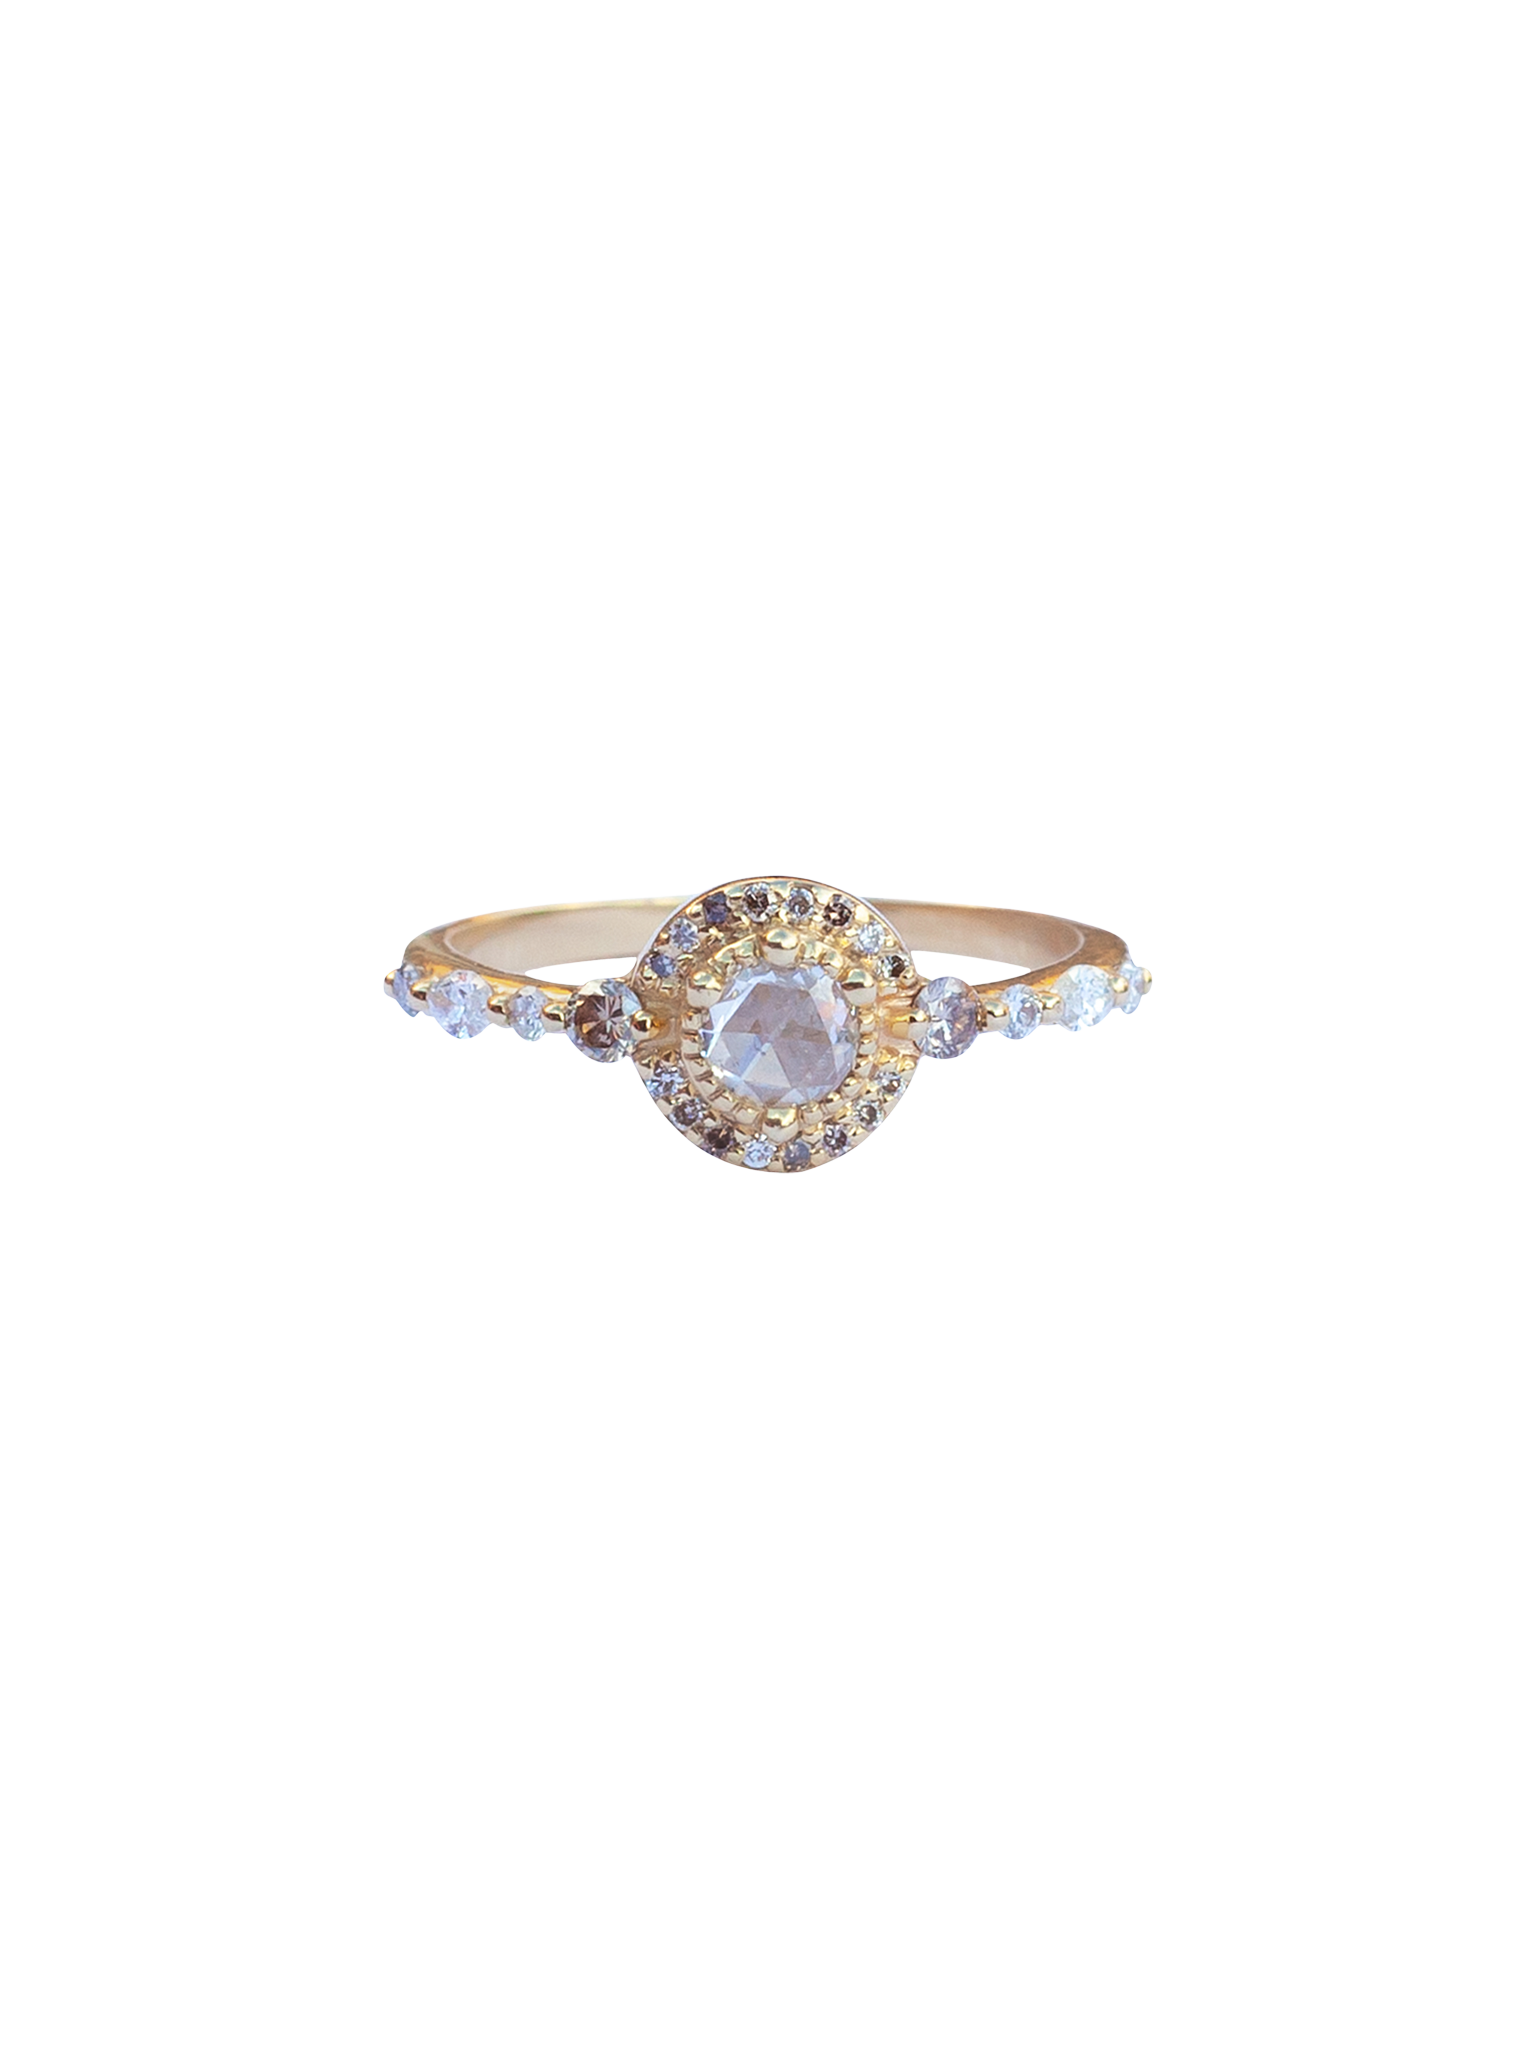 Monarch champagne diamond ring